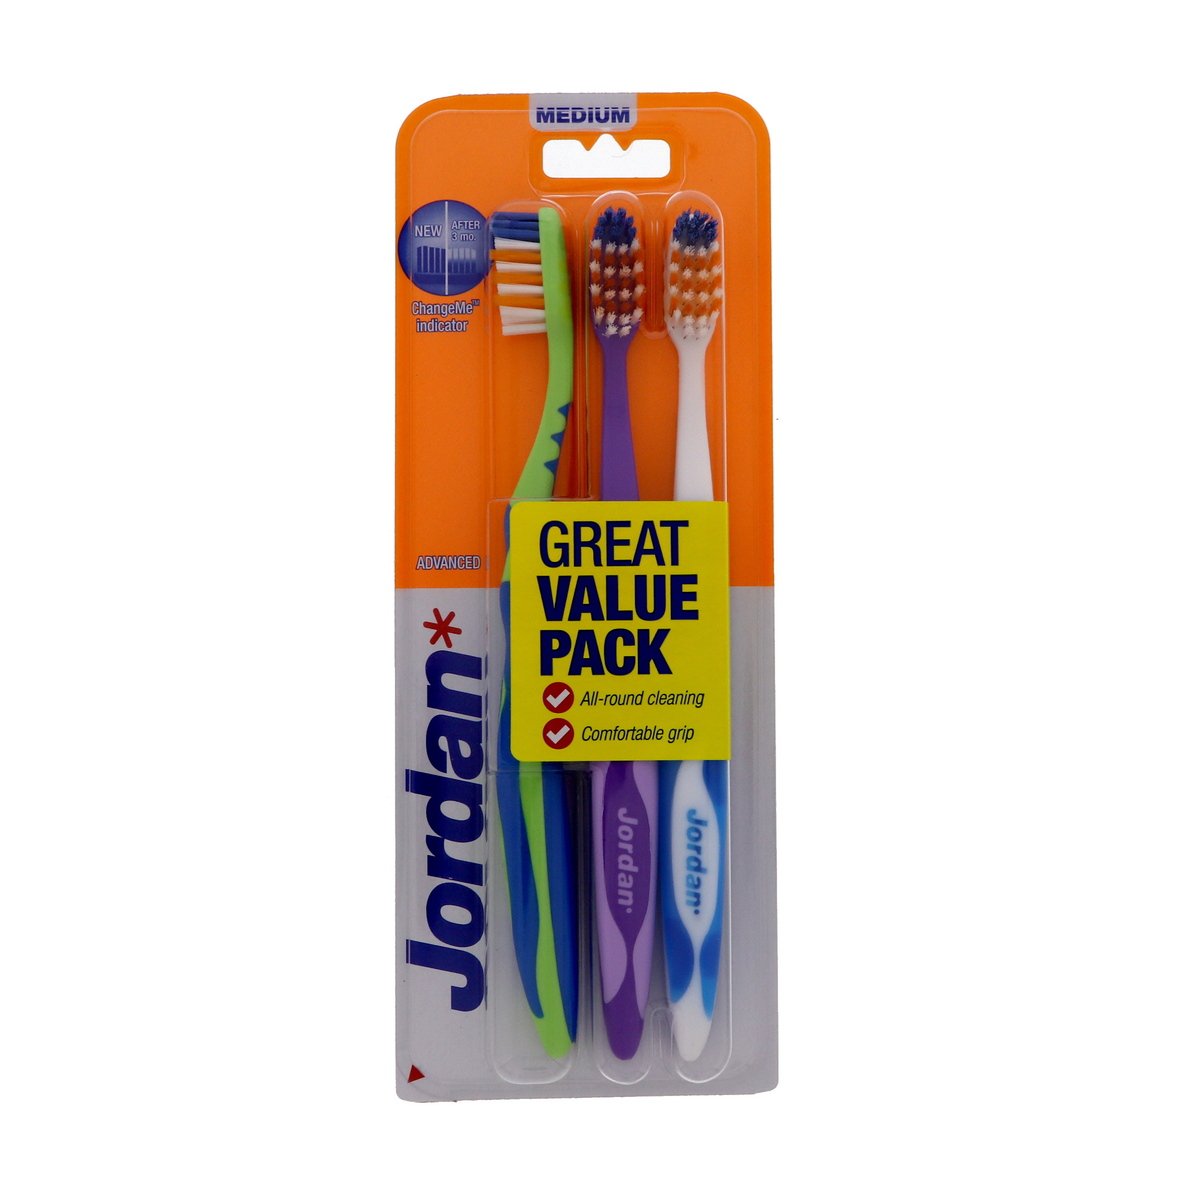 Jordan Advanced Toothbrush Medium Assorted Color 3 pcs